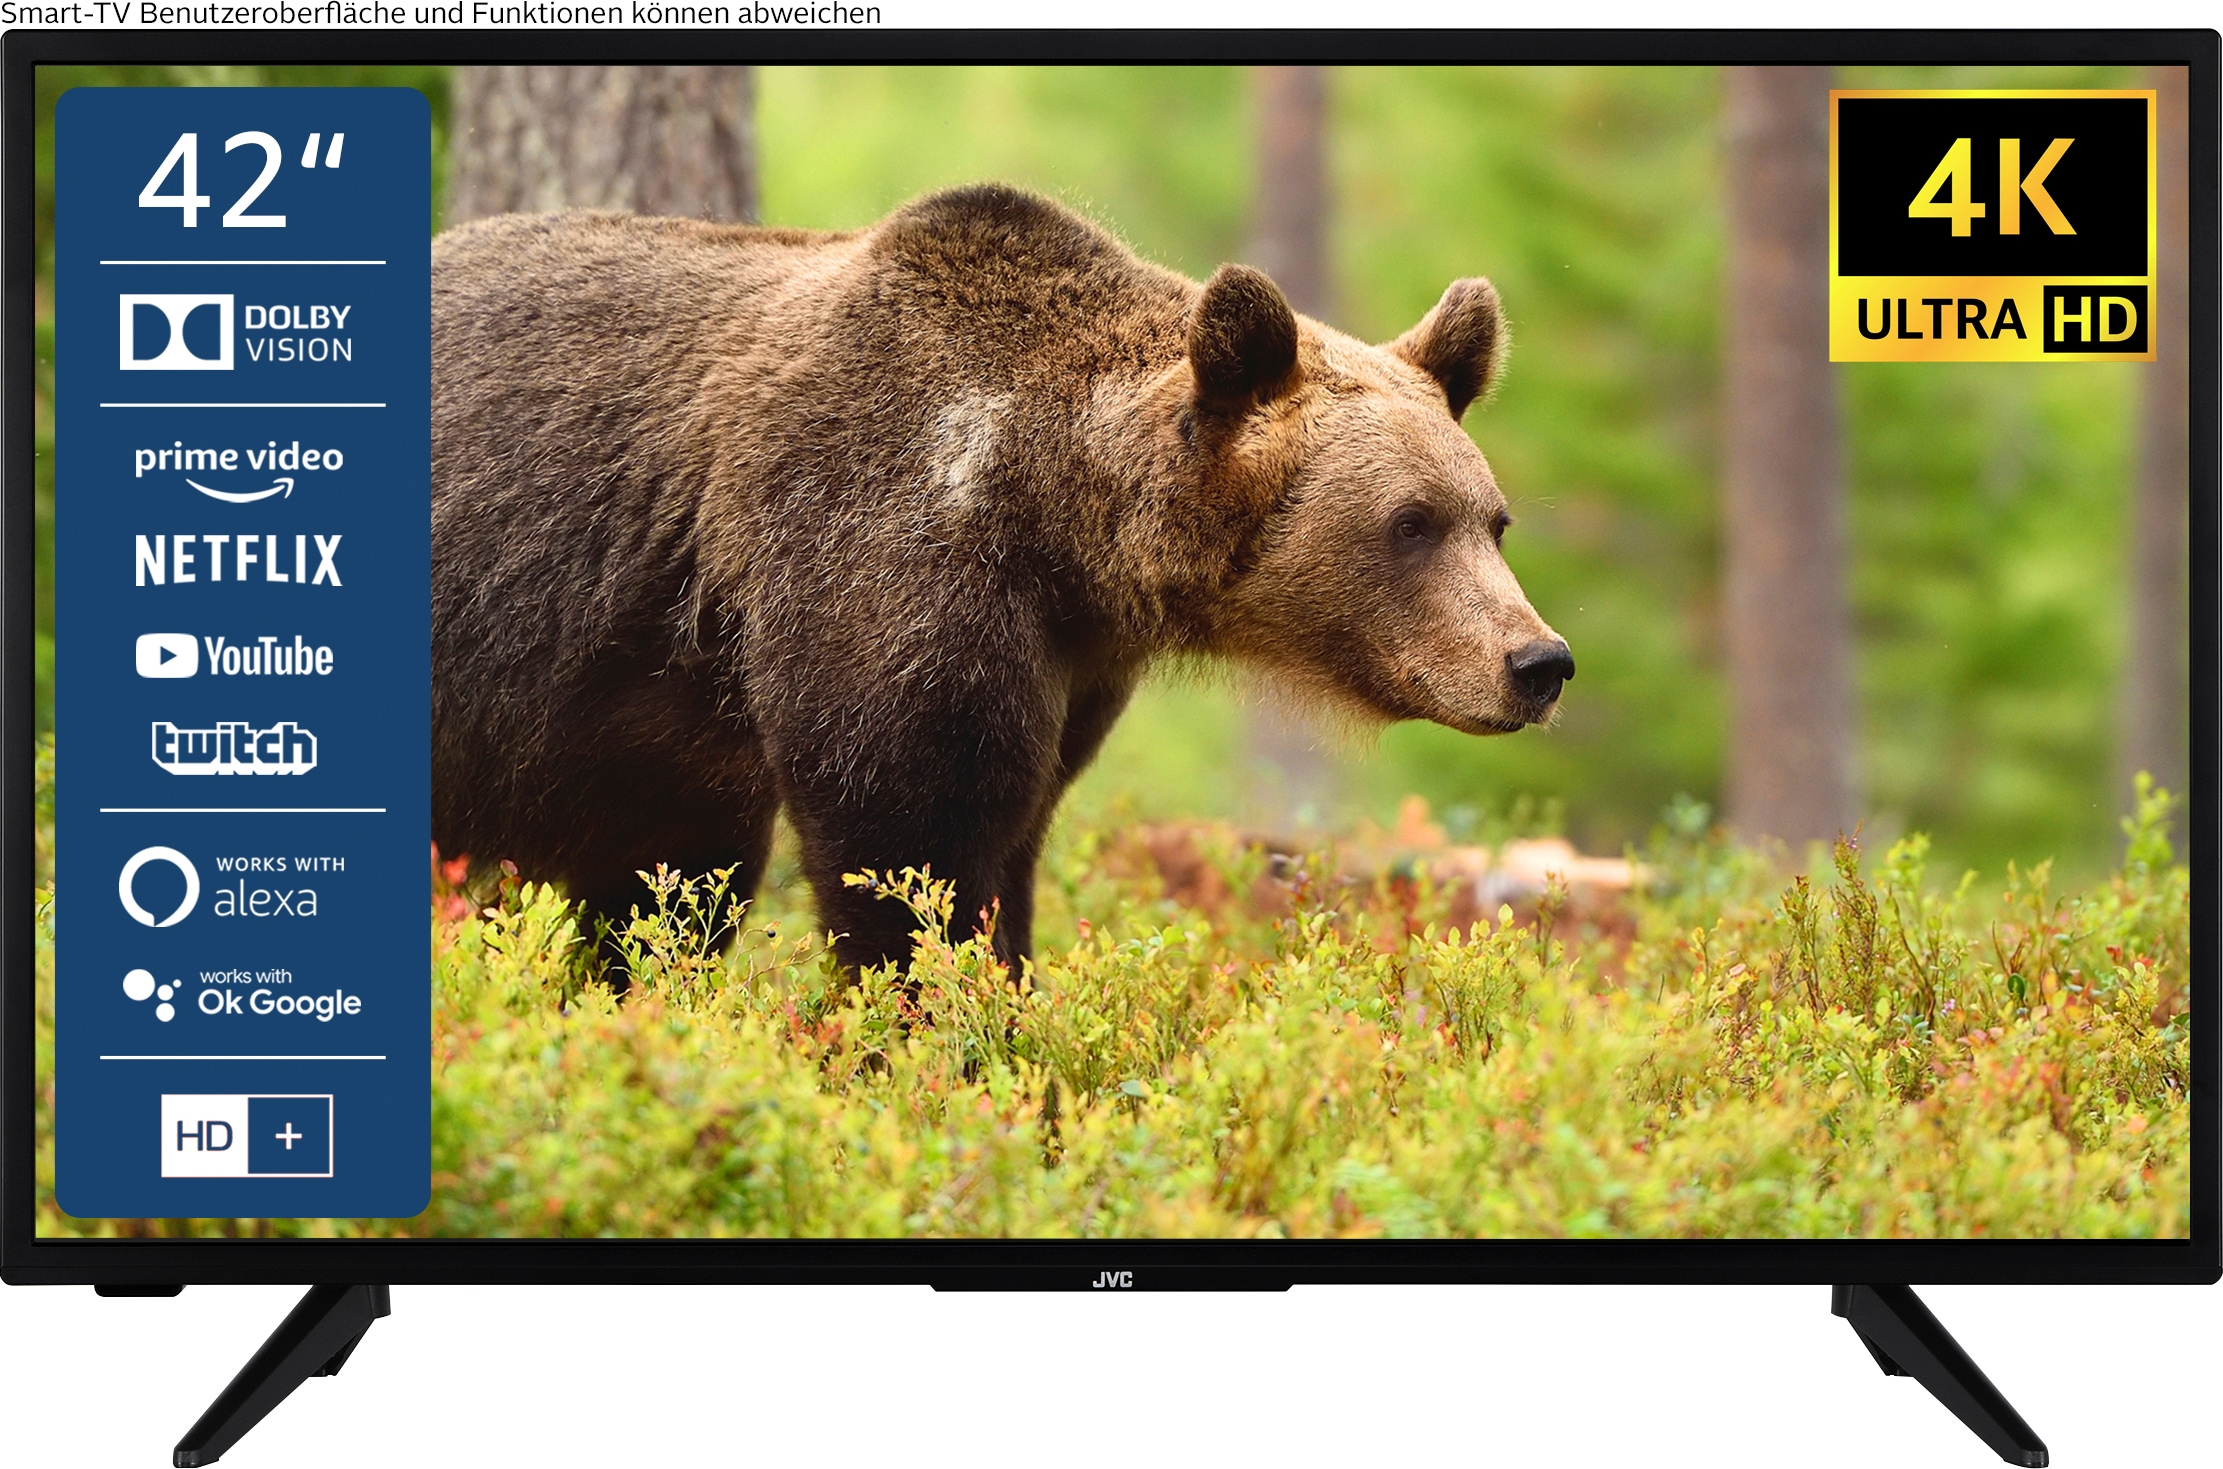 JVC LED-Fernseher »LT-42VU3155«, 106 cm/42 Zoll, 4K Ultra HD, Smart TV, HDR  Dolby Vision, Triple-Tuner, 6 Monate HD+ inklusive jetzt kaufen bei OTTO